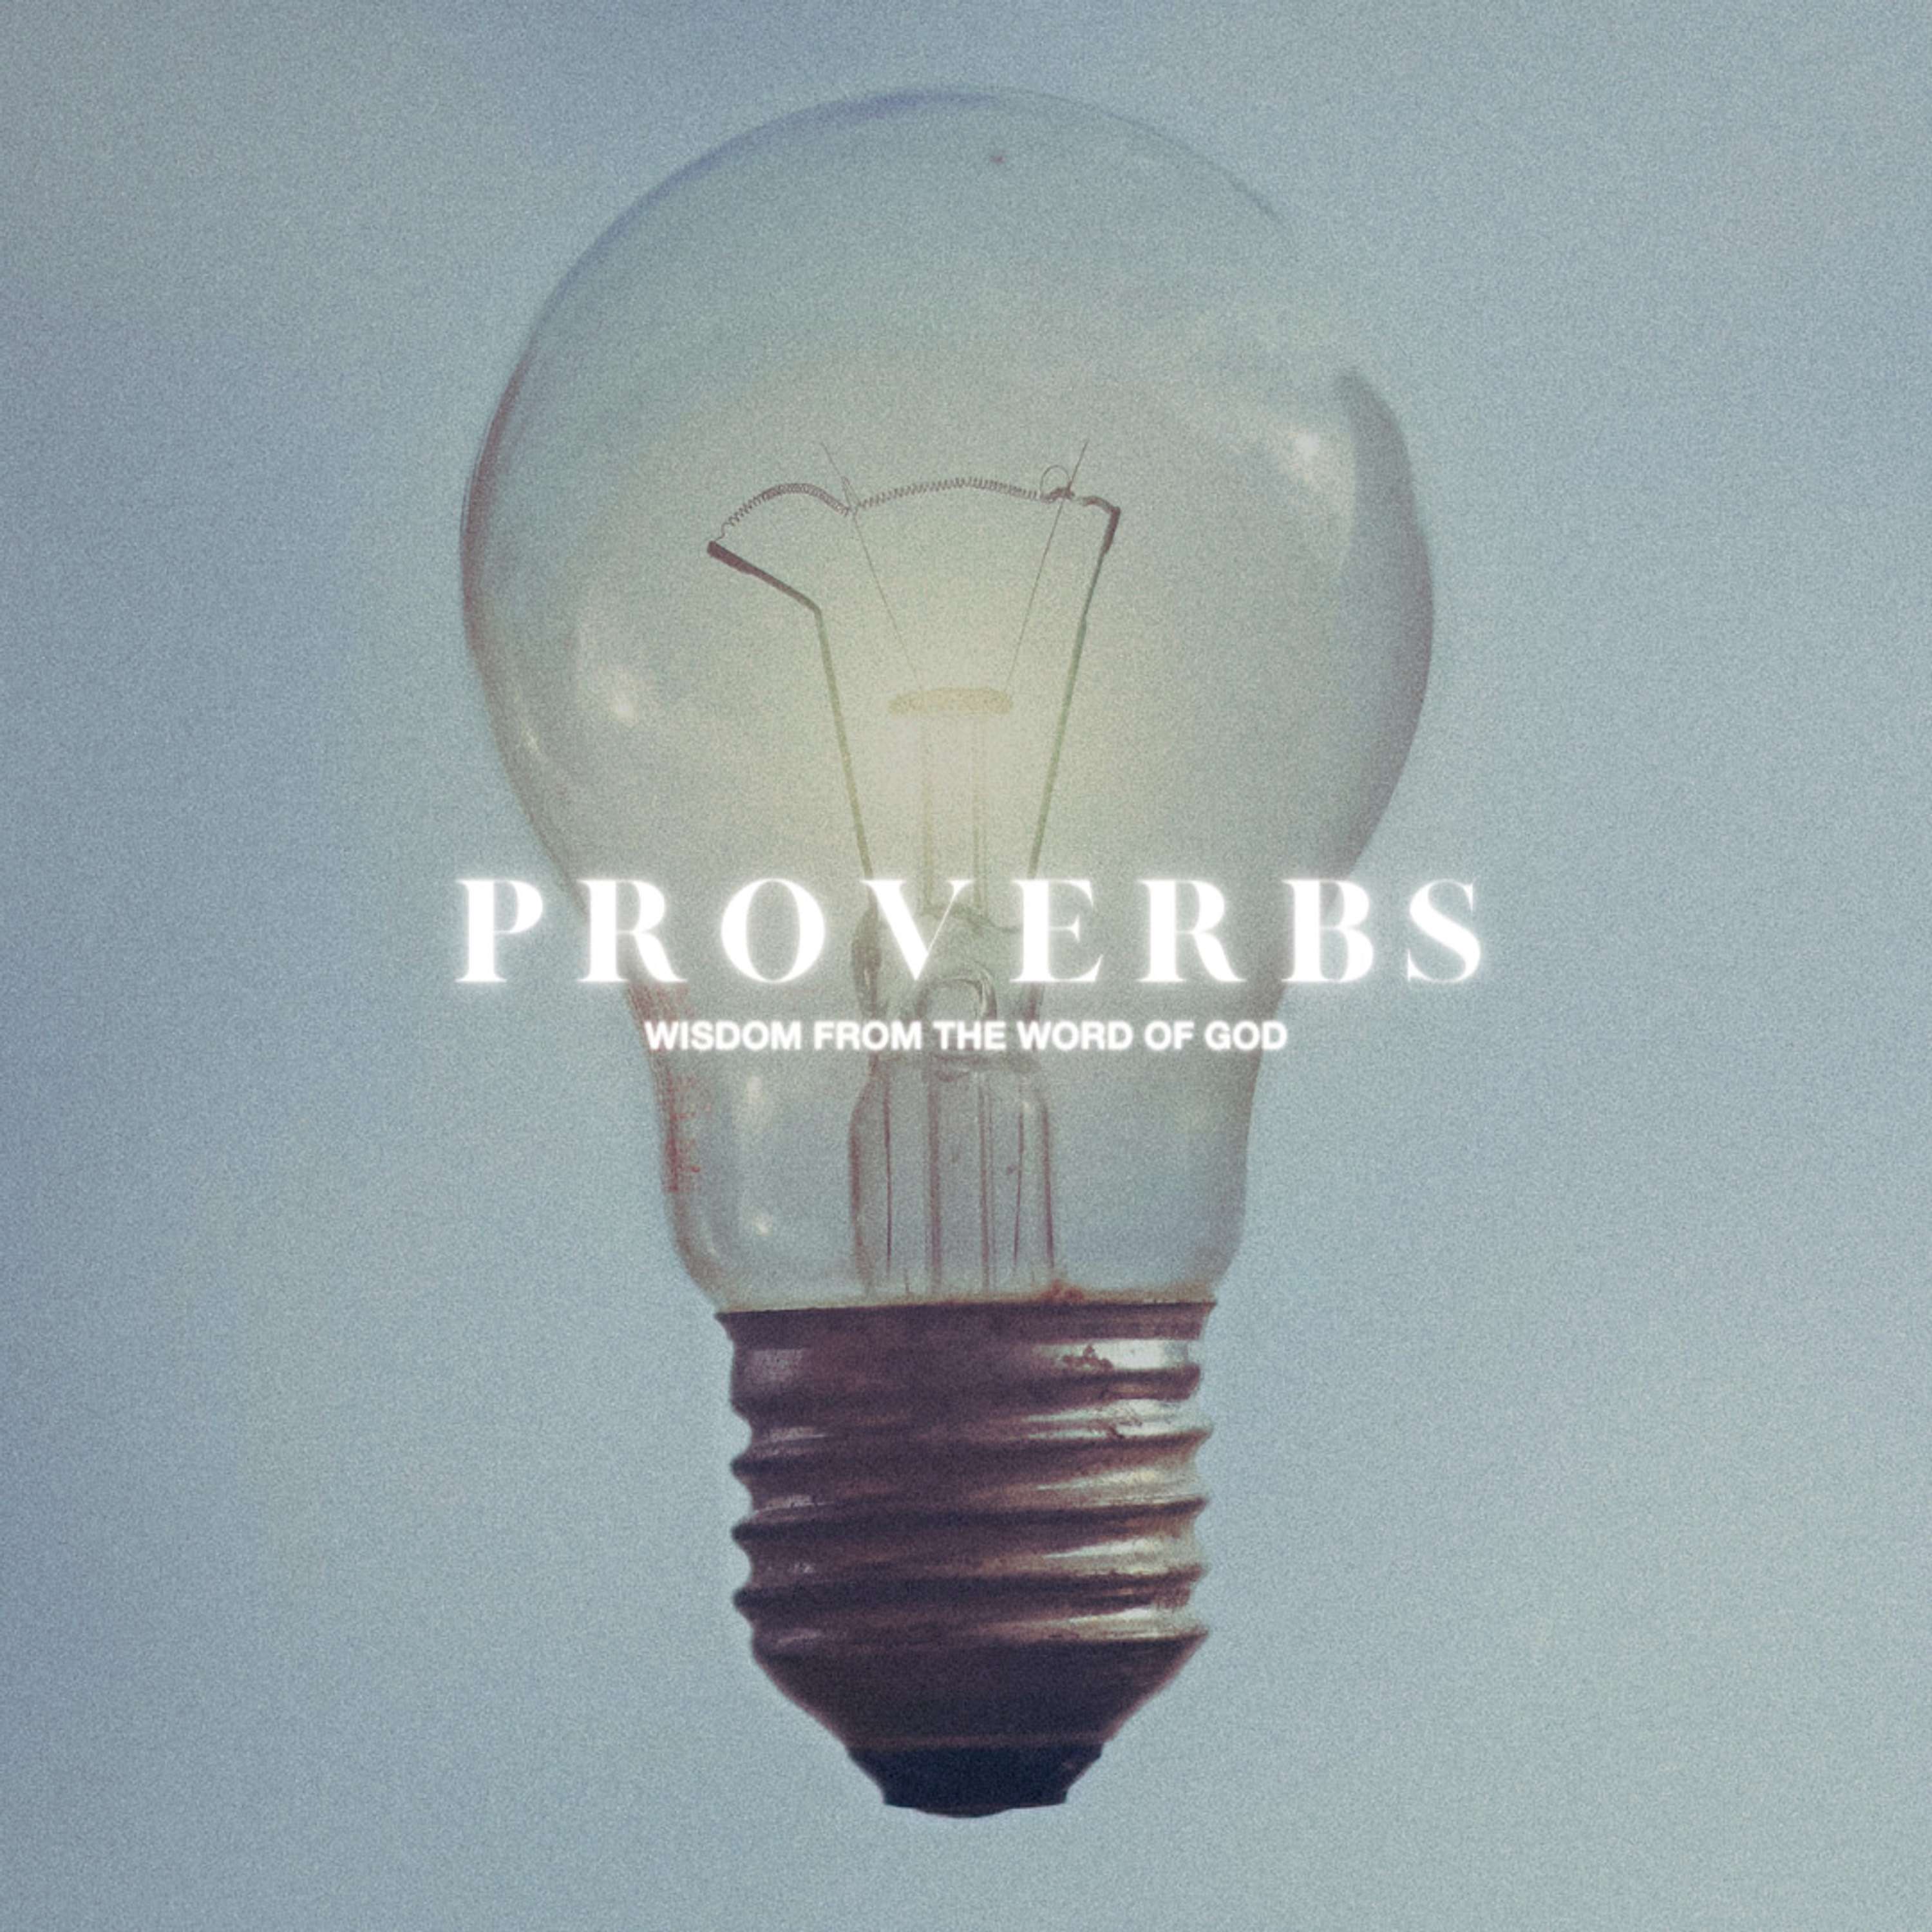 Proverbs Week 1 | Having True Wisdom